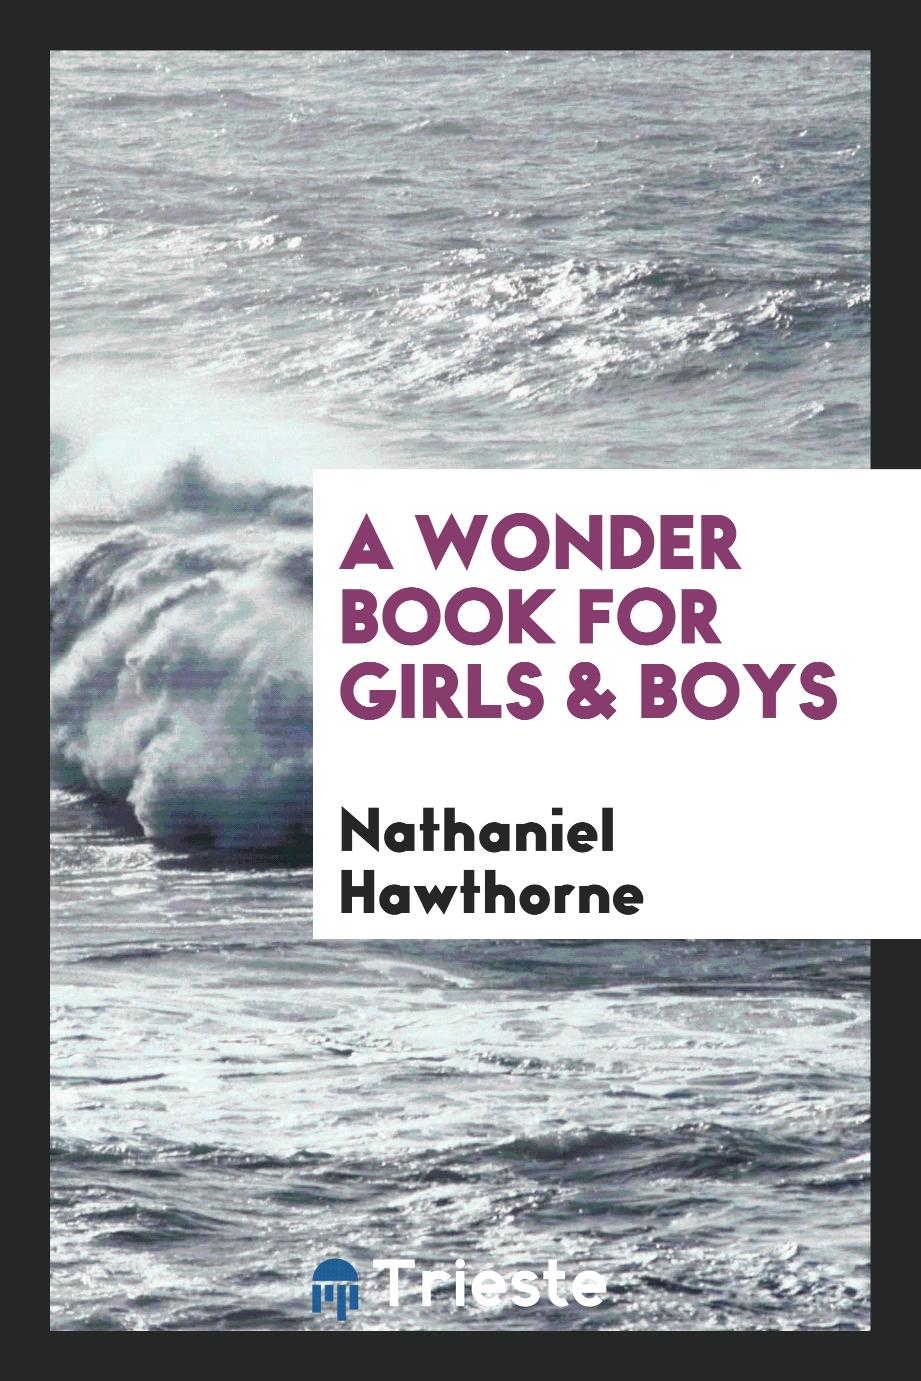 A wonder book for girls & boys